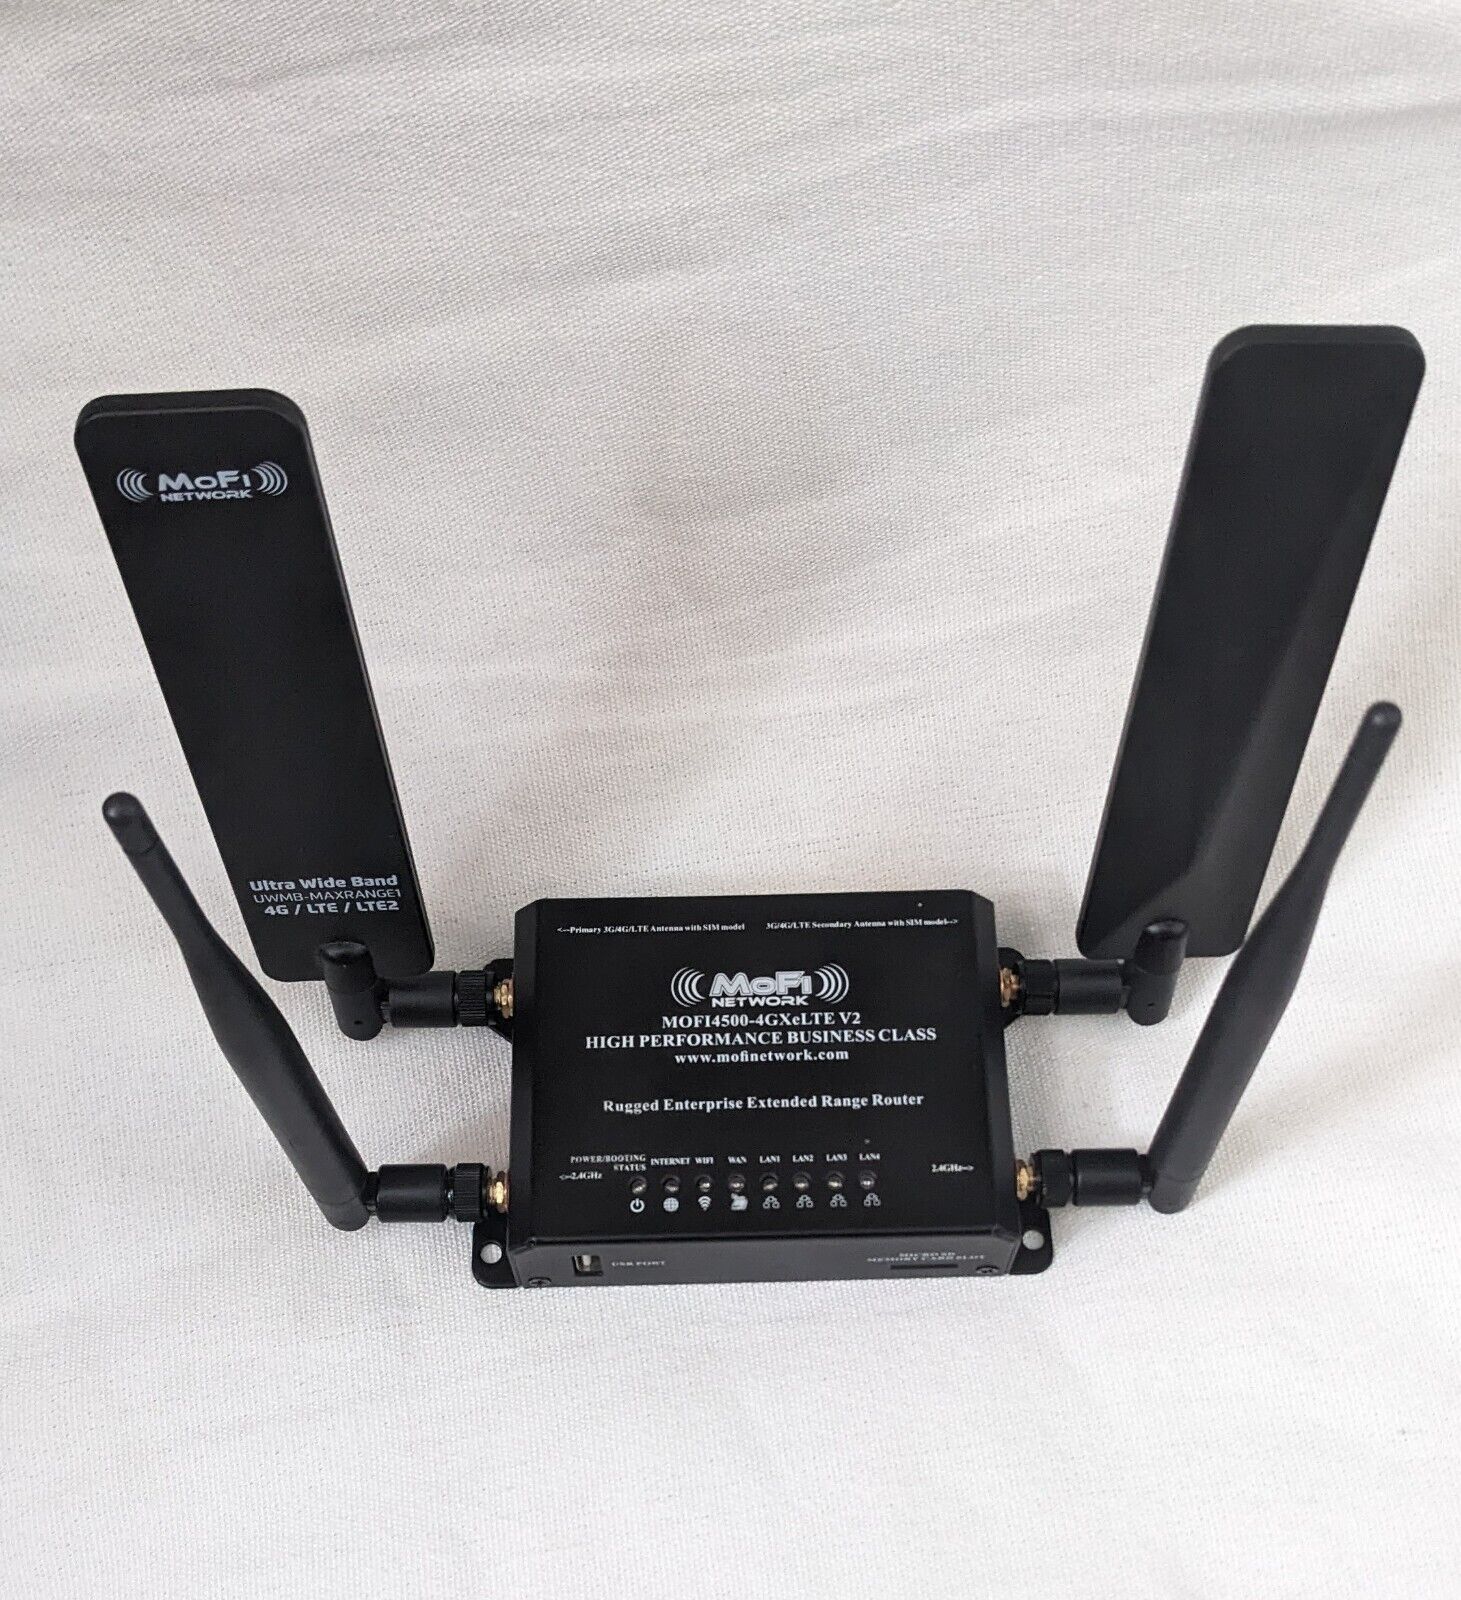 Mofi Network MOFI4500-4GXeLTE-SIM4 V2 3G/4G/LTE Router